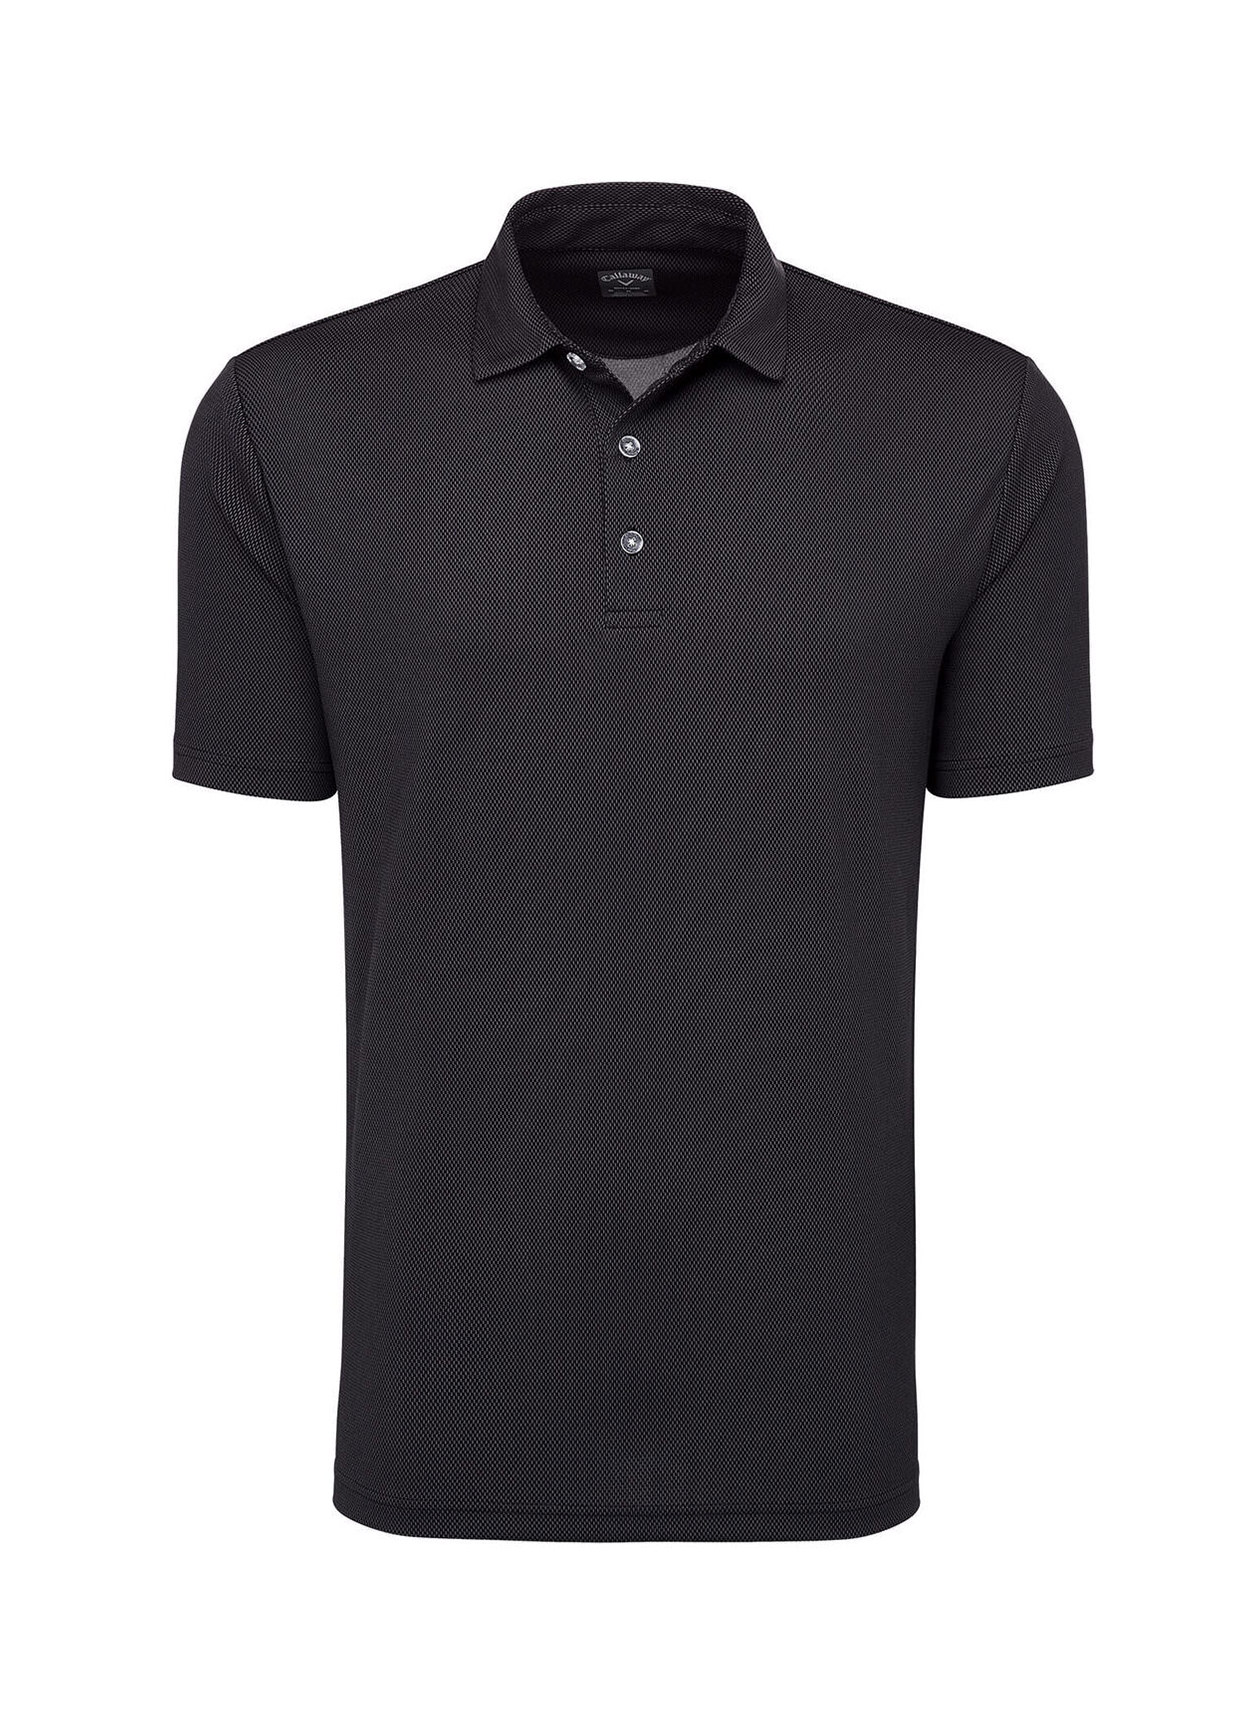 Embroidered Callaway Men's Black Golf Birdseye Polo | Custom Vest